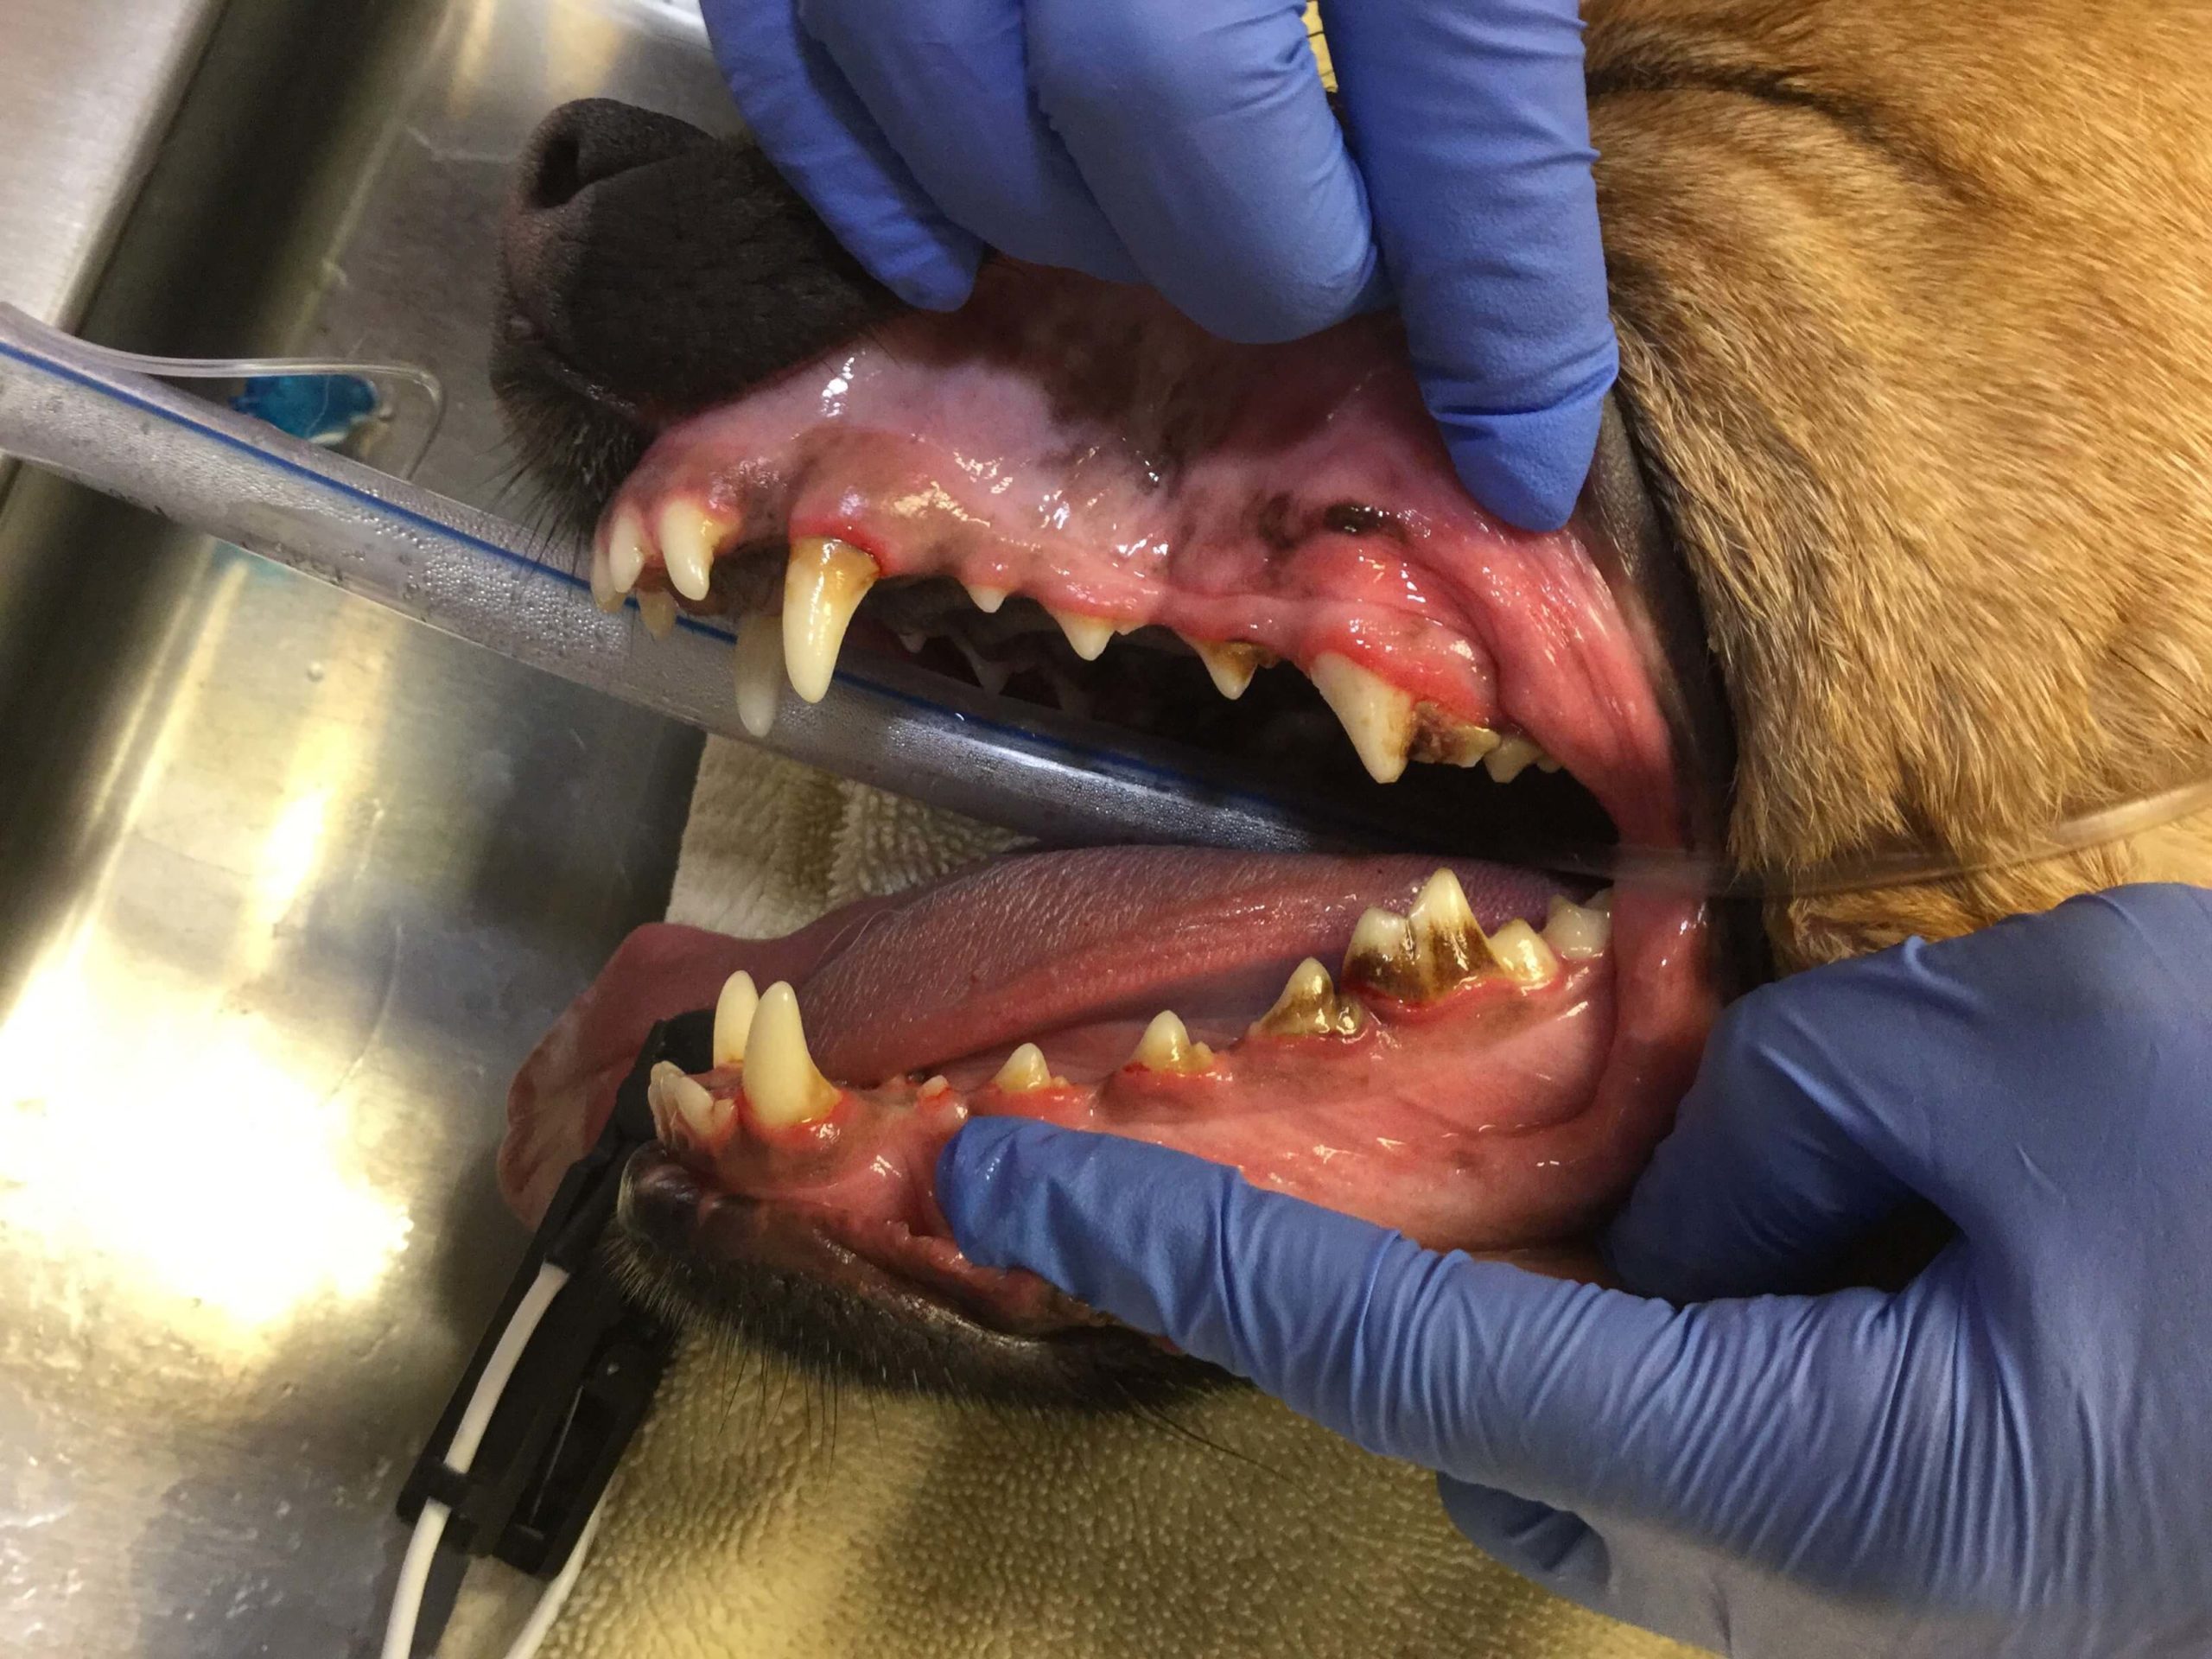 Gloved fingers performing pet dental work on a dog